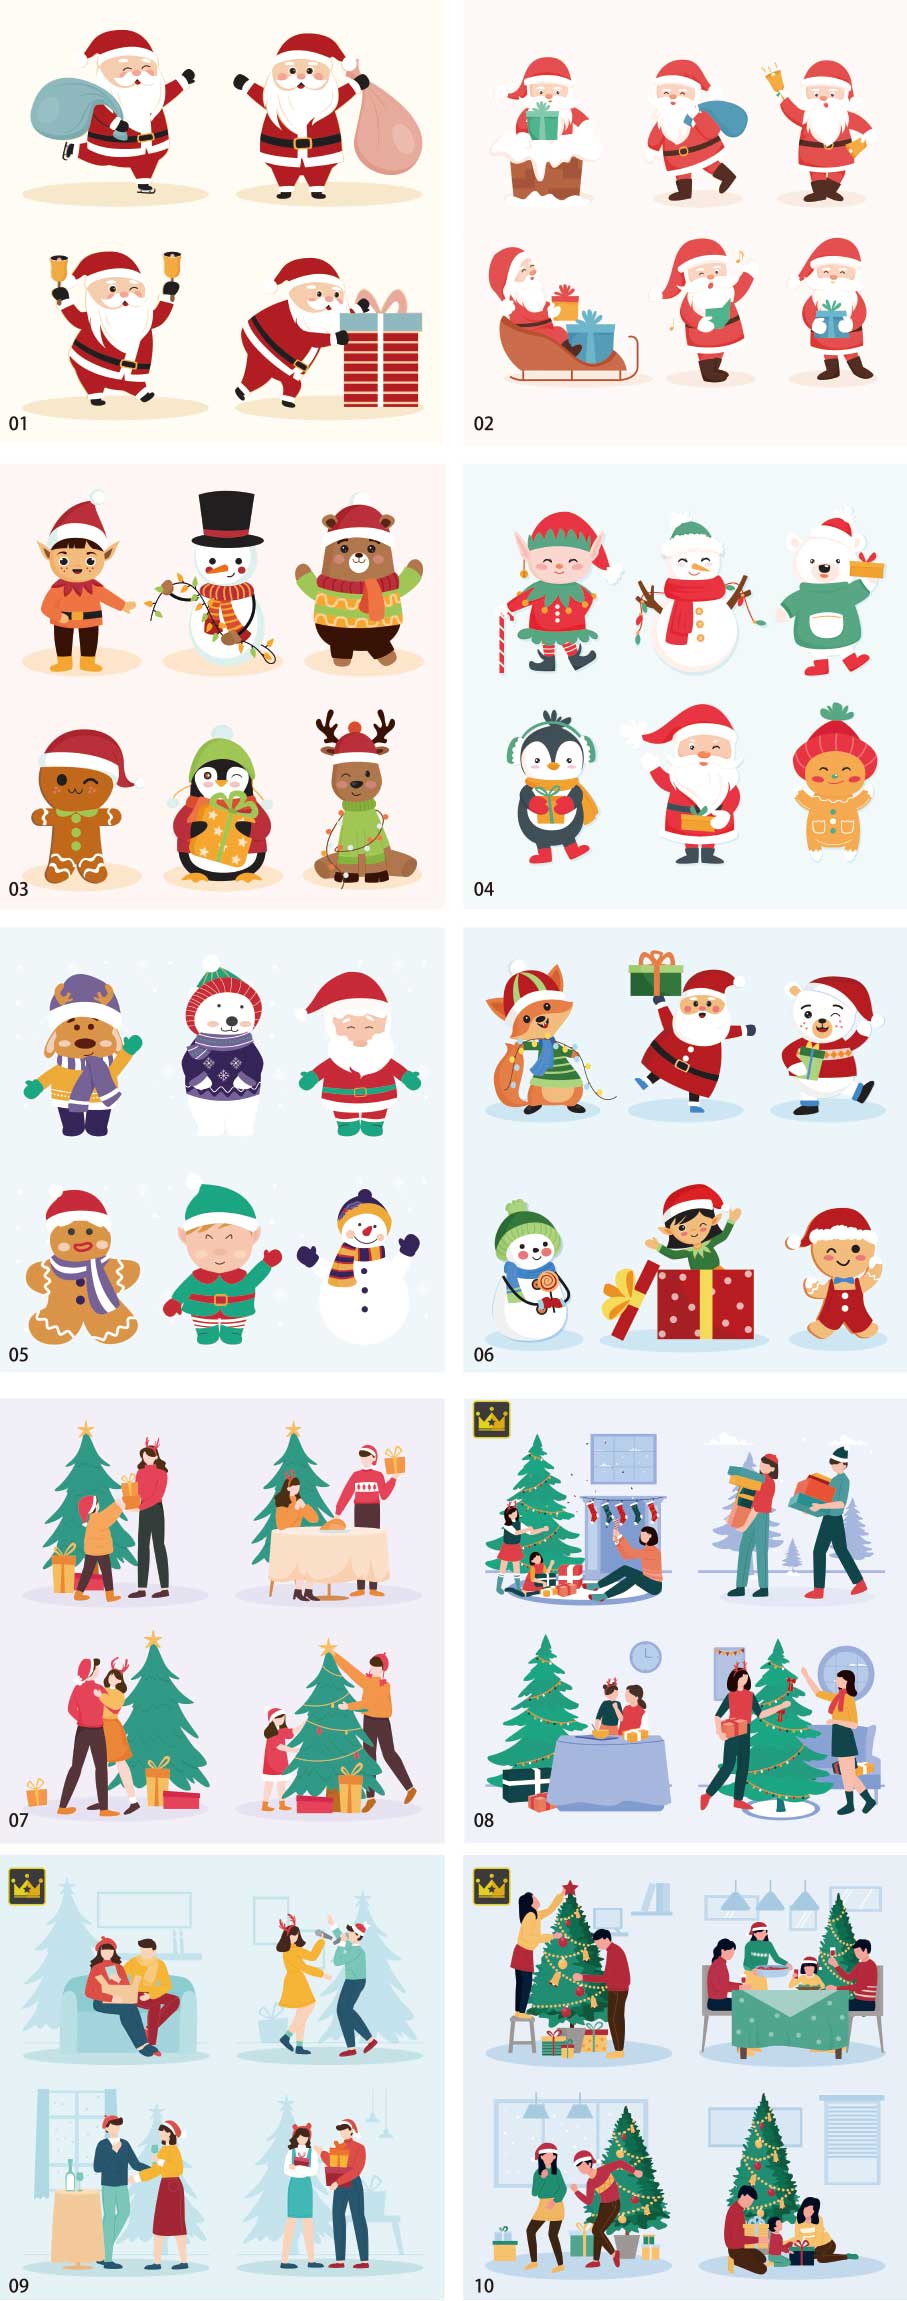 Christmas illustration collection